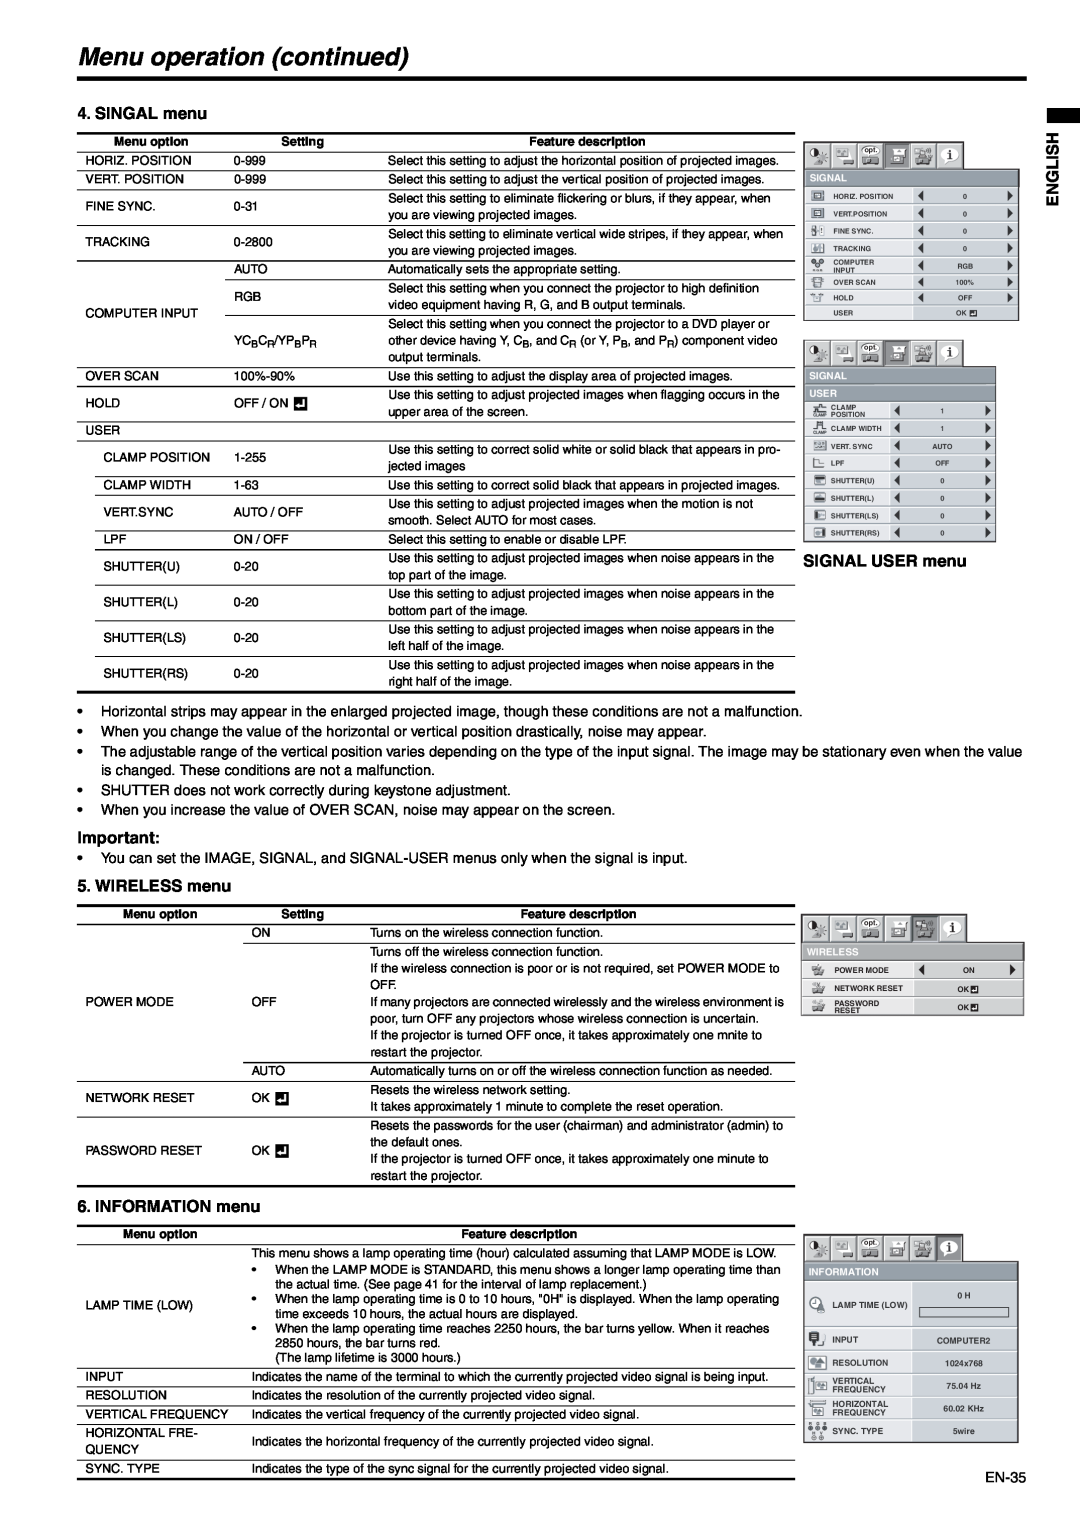 Mitsubishi Electronics XD530E SINGAL menu, SIGNAL USER menu, WIRELESS menu, INFORMATION menu, Menu operation continued 